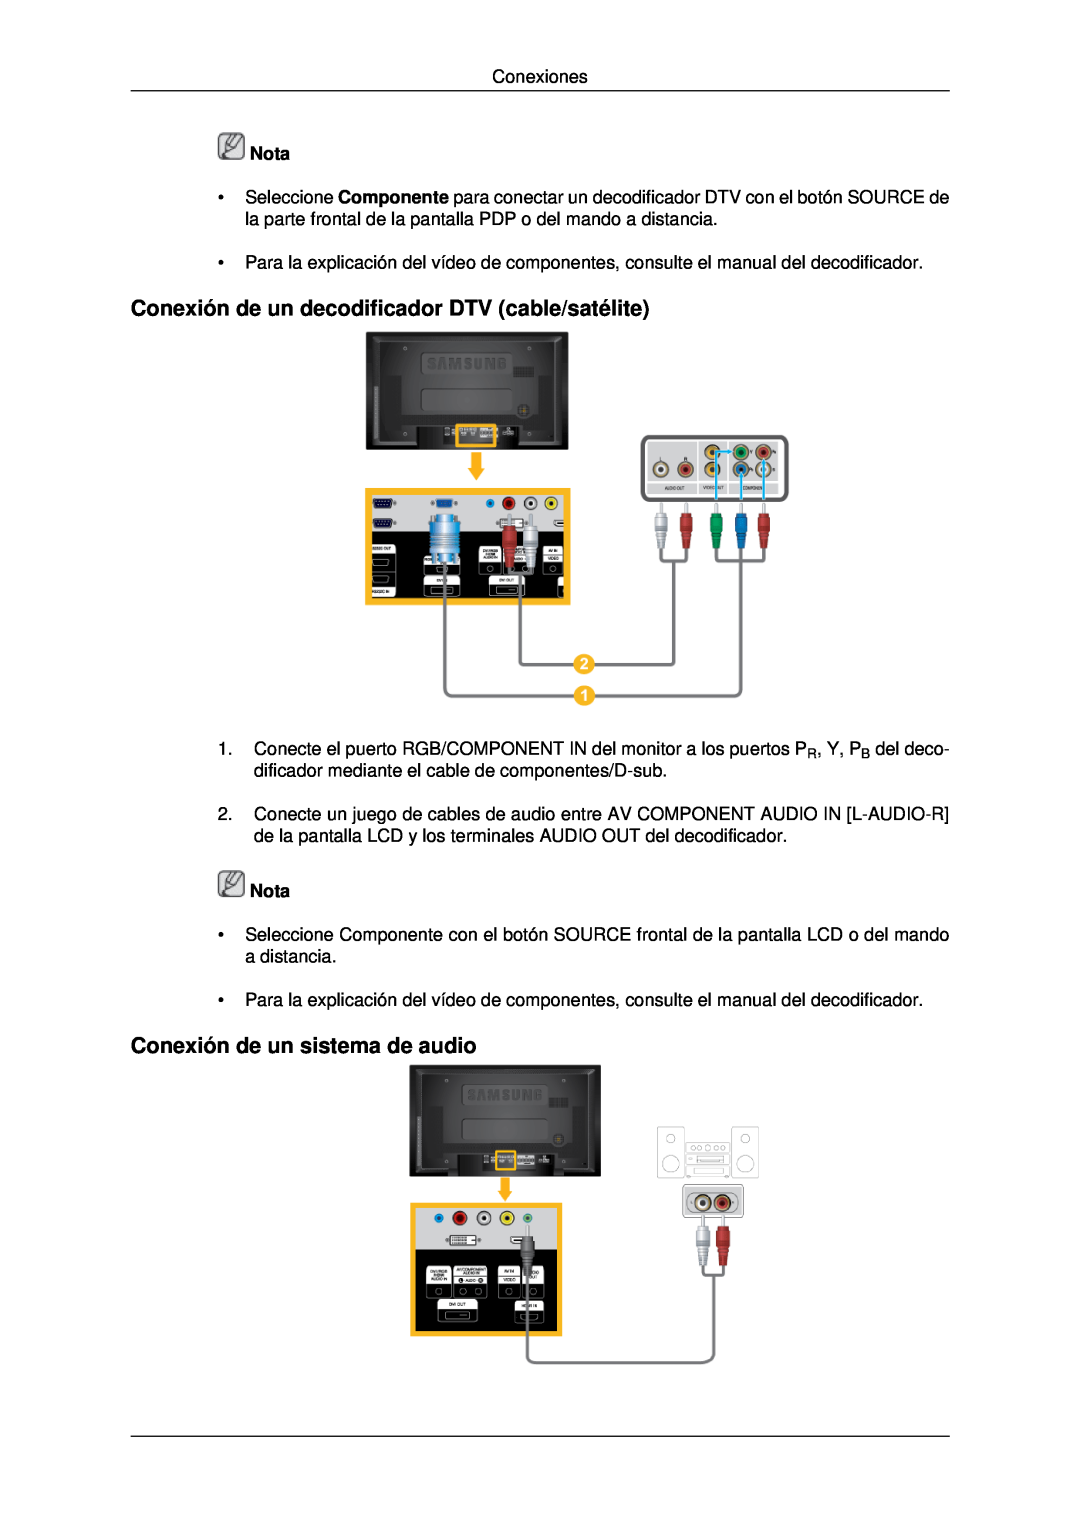 Samsung LH46MRTLBC/EN manual Conexión de un decodificador DTV cable/satélite, Conexión de un sistema de audio, Nota 